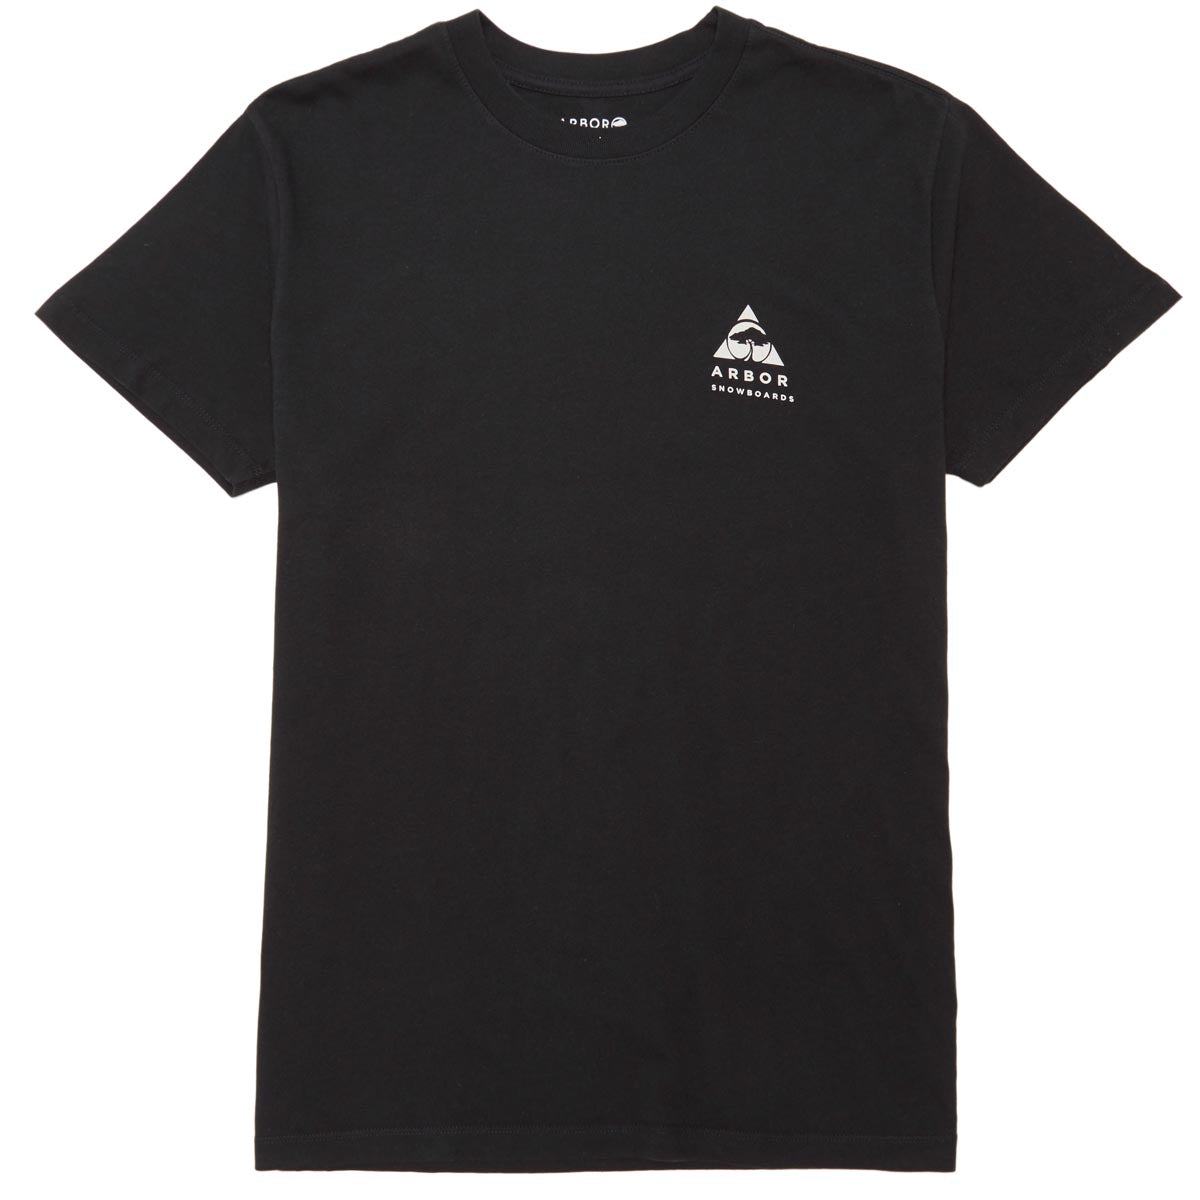 Arbor Buffalo T-Shirt - Black image 2